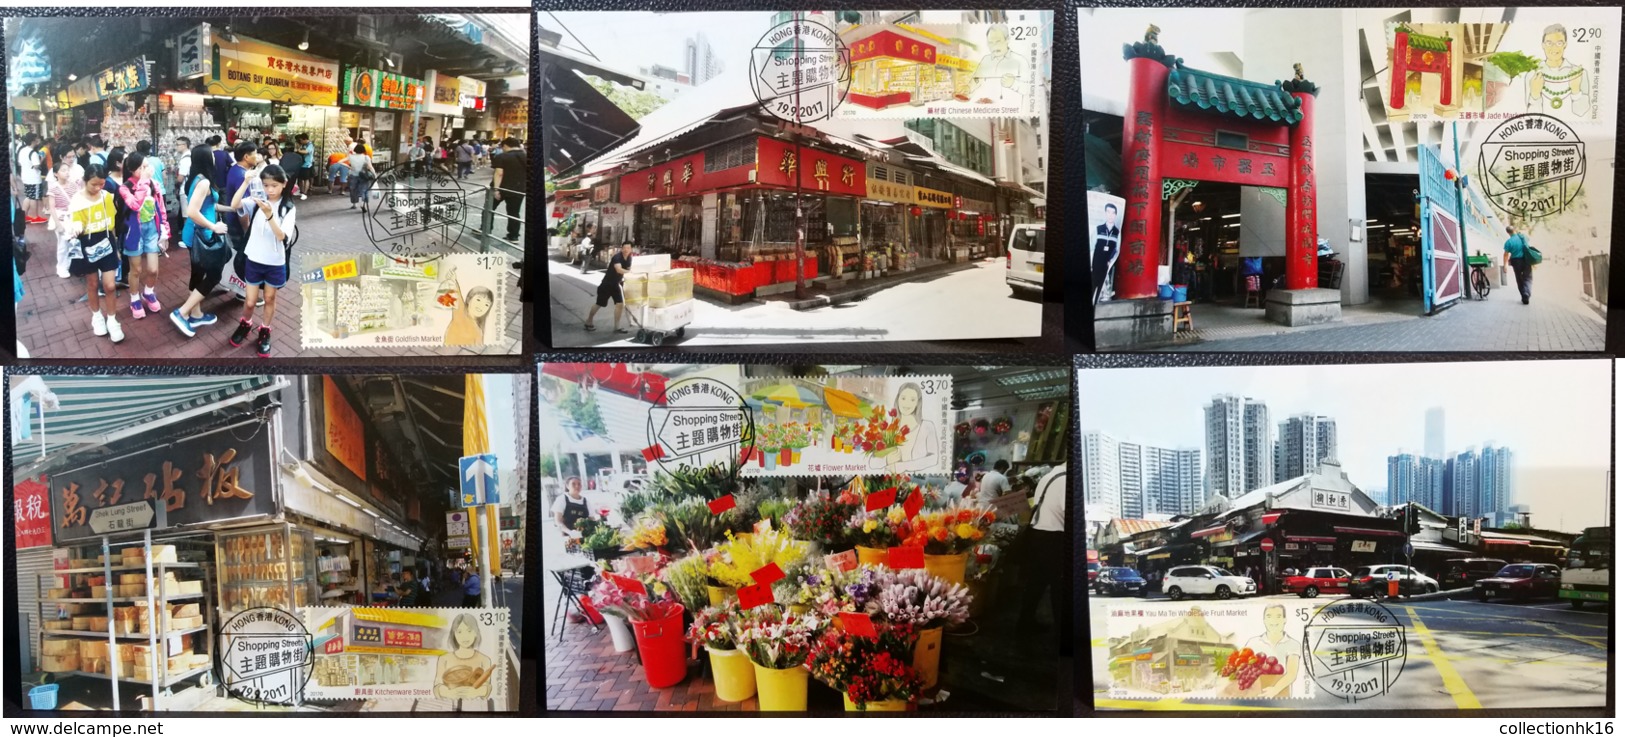 Hong Kong Shopping Streets (Fruit, Flower, Jade ...) 2017 Hong Kong Maximum Card MC Set (Pictorial Postmark) (6 Cards) - Cartes-maximum